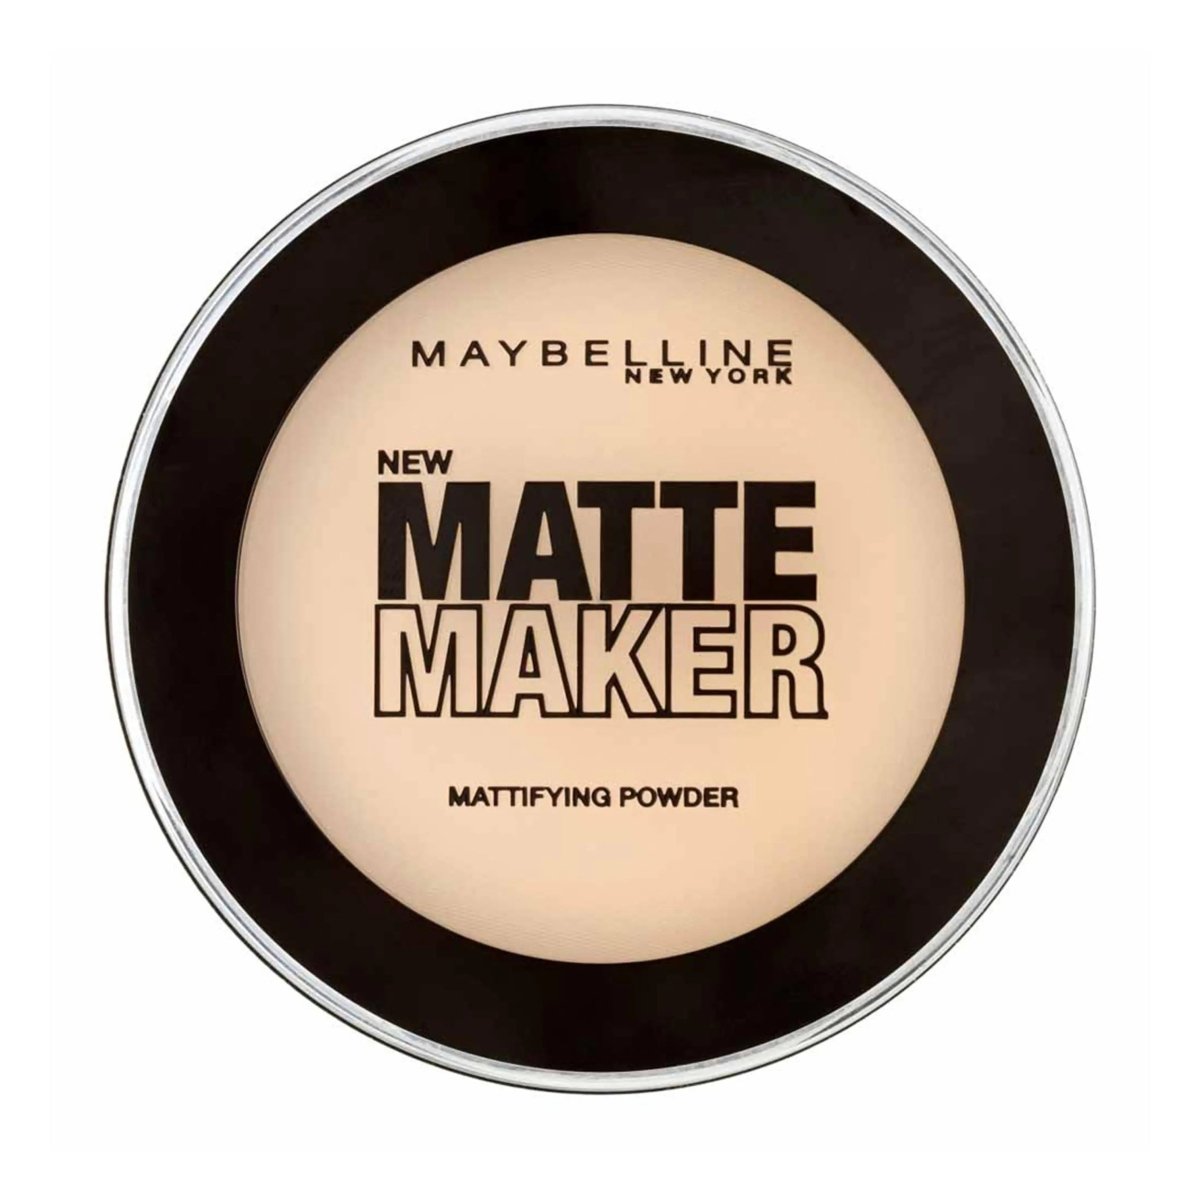 Image of Maybelline Matte Maker Mattifying Powder